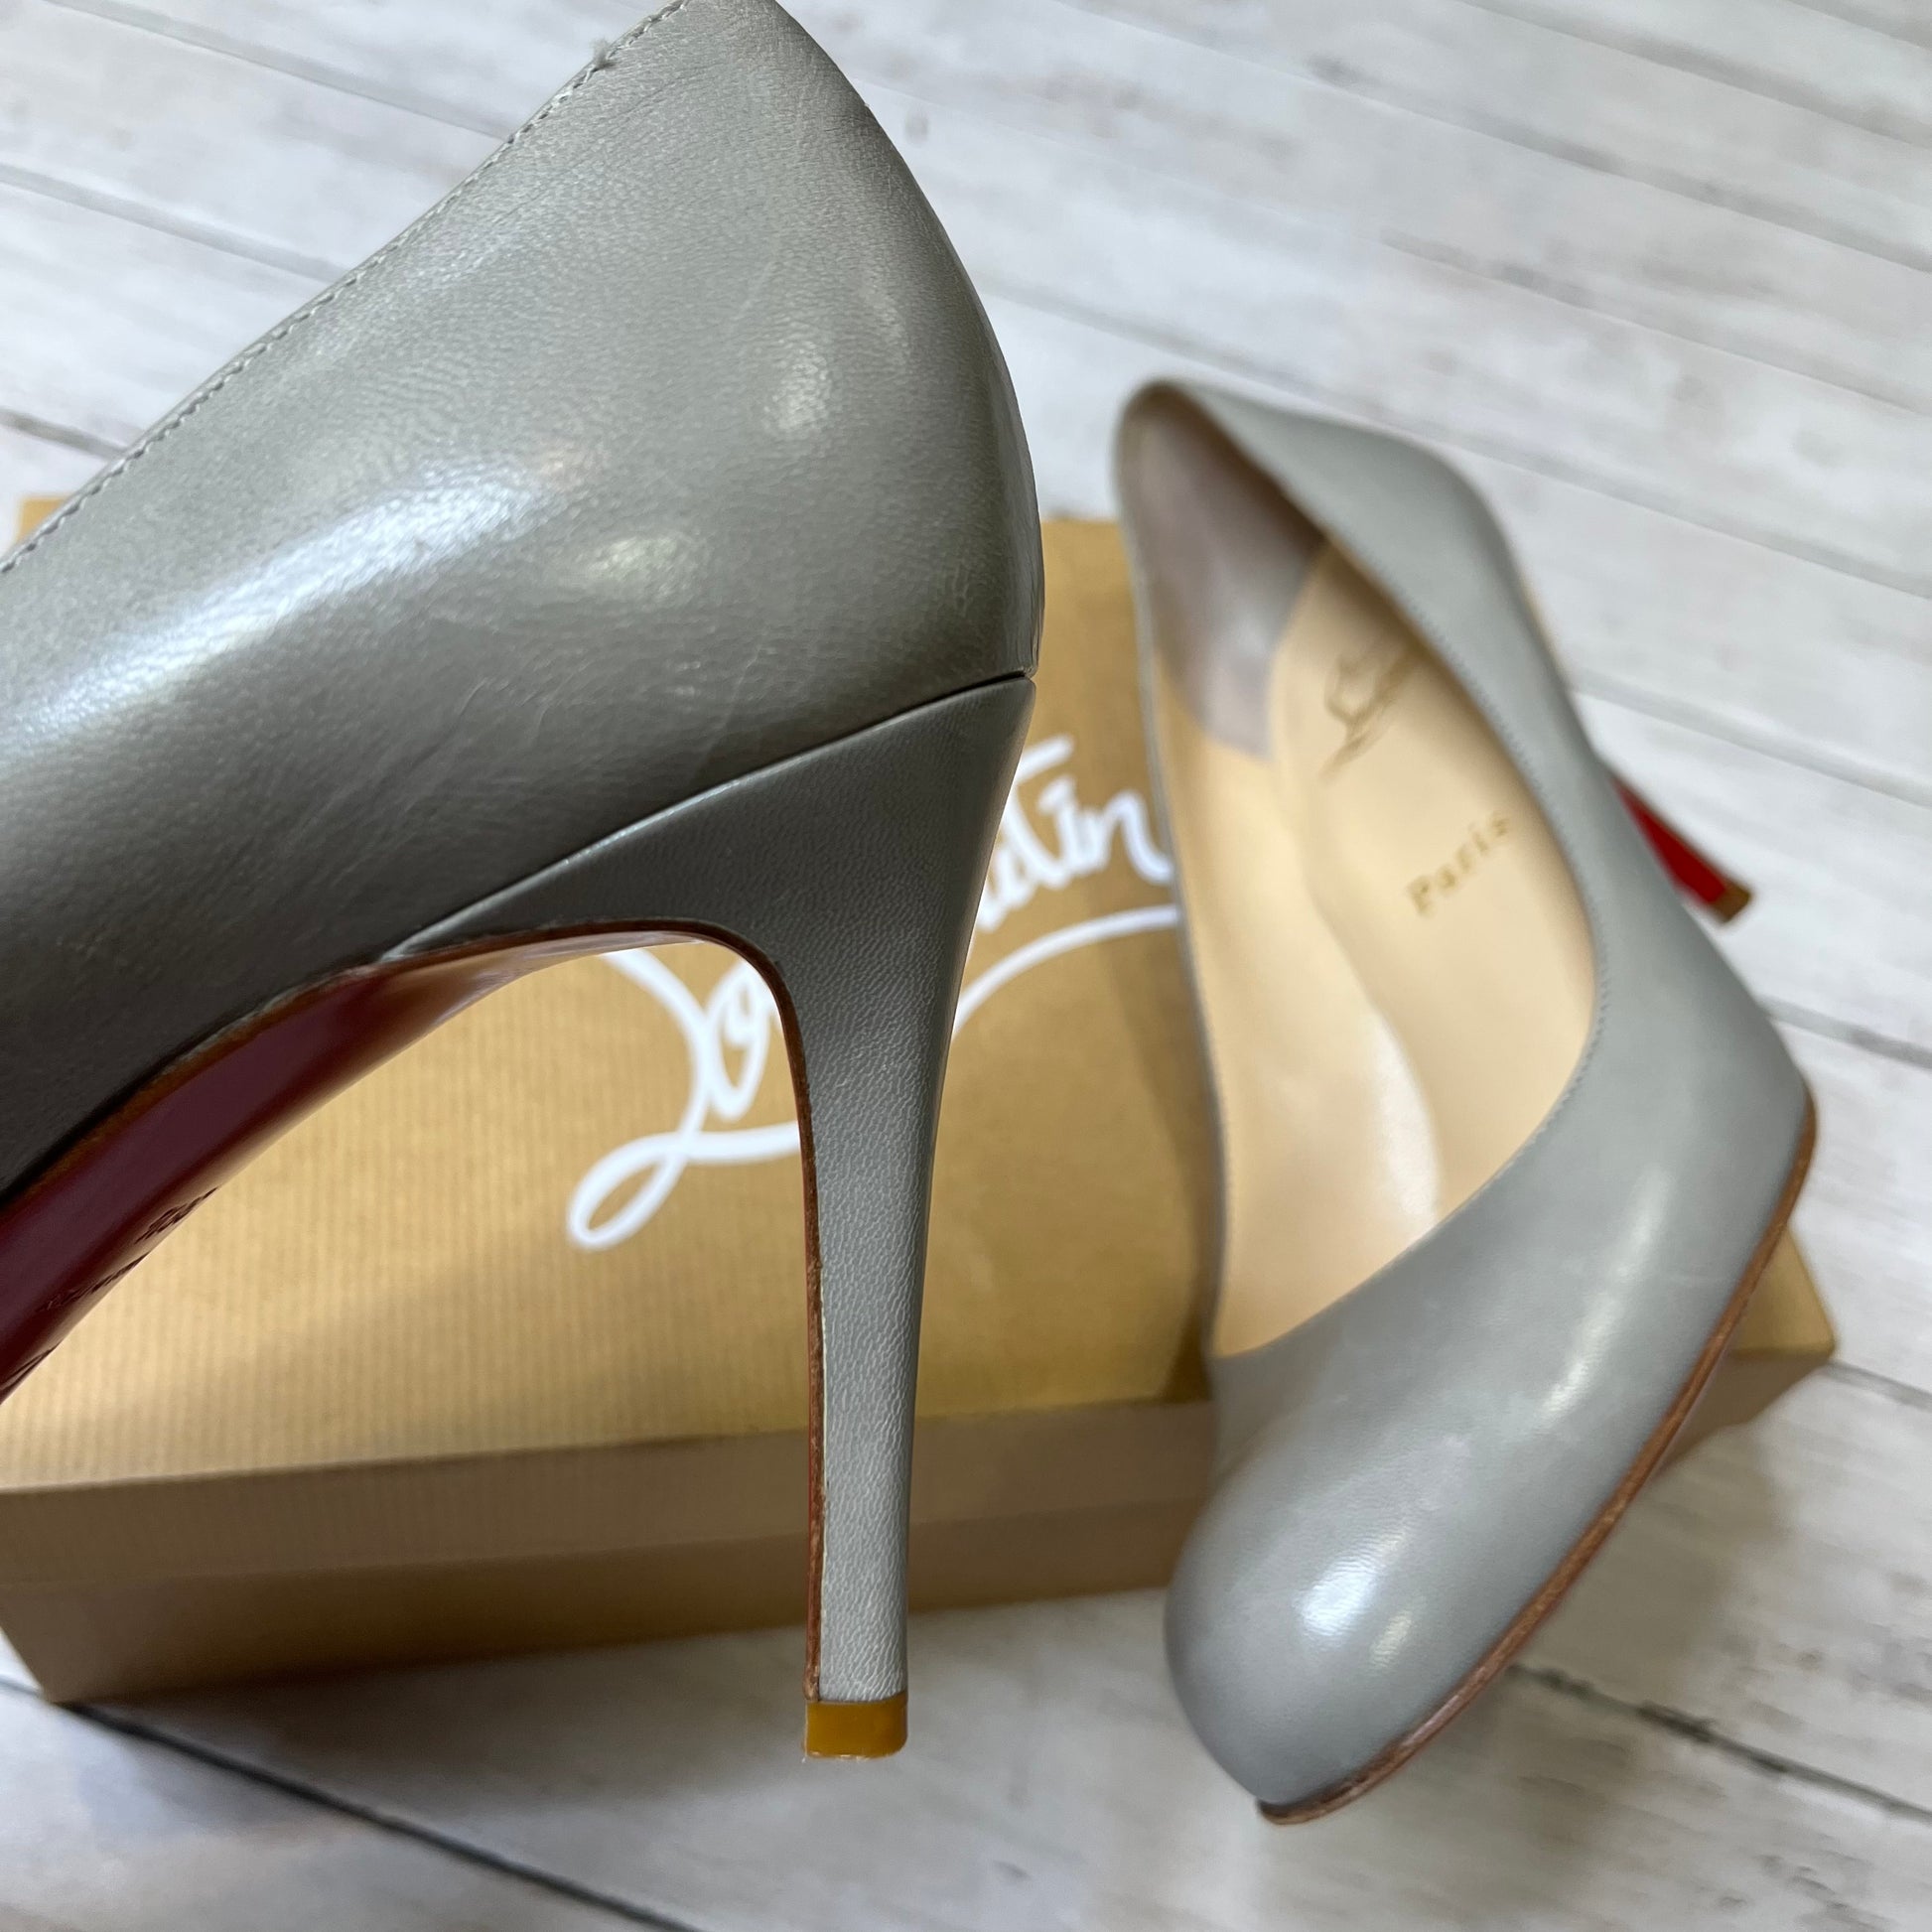 Designer shoes for women - Christian Louboutin